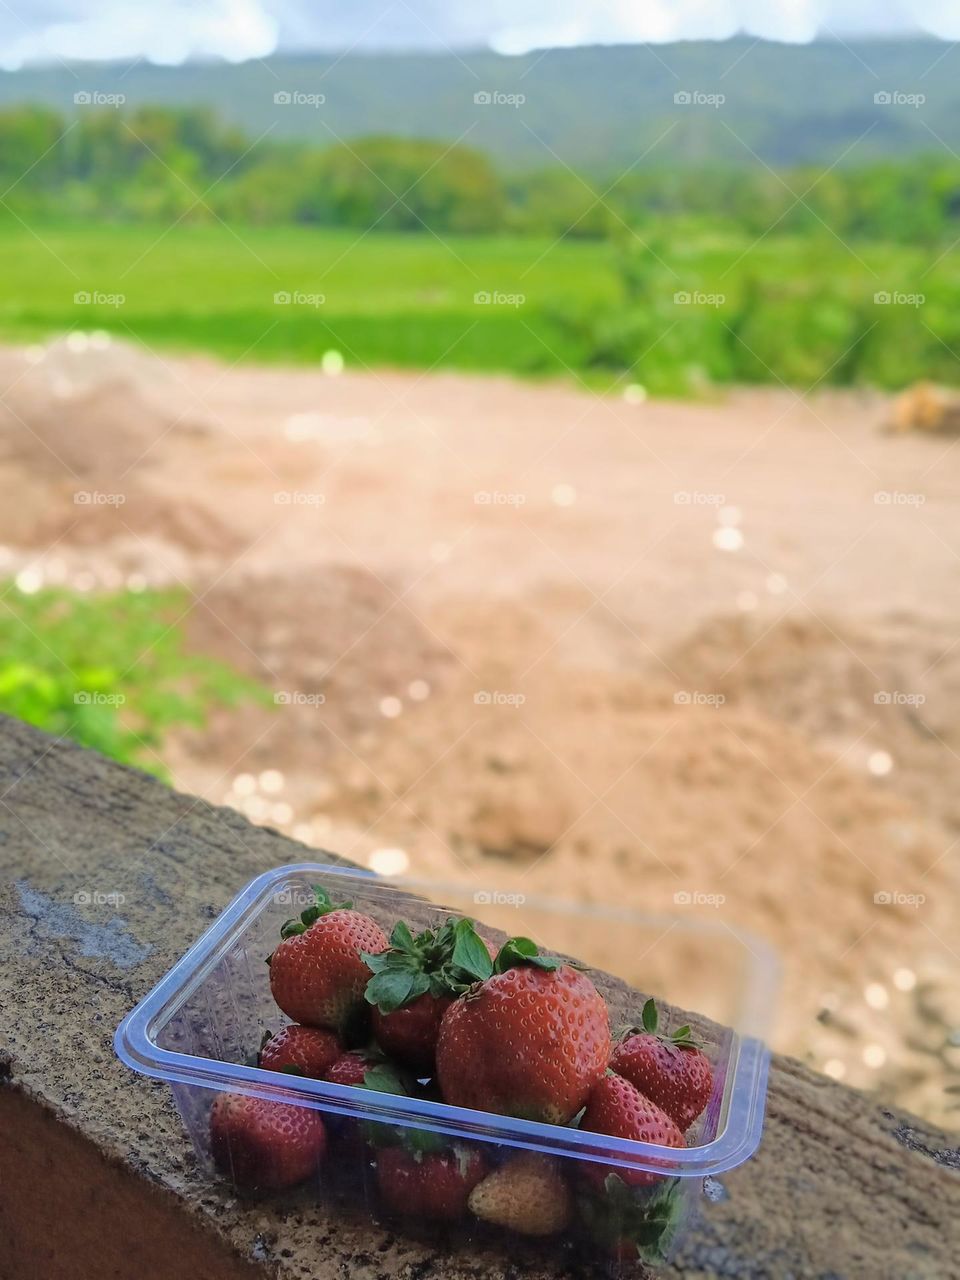 strawberry 🍓